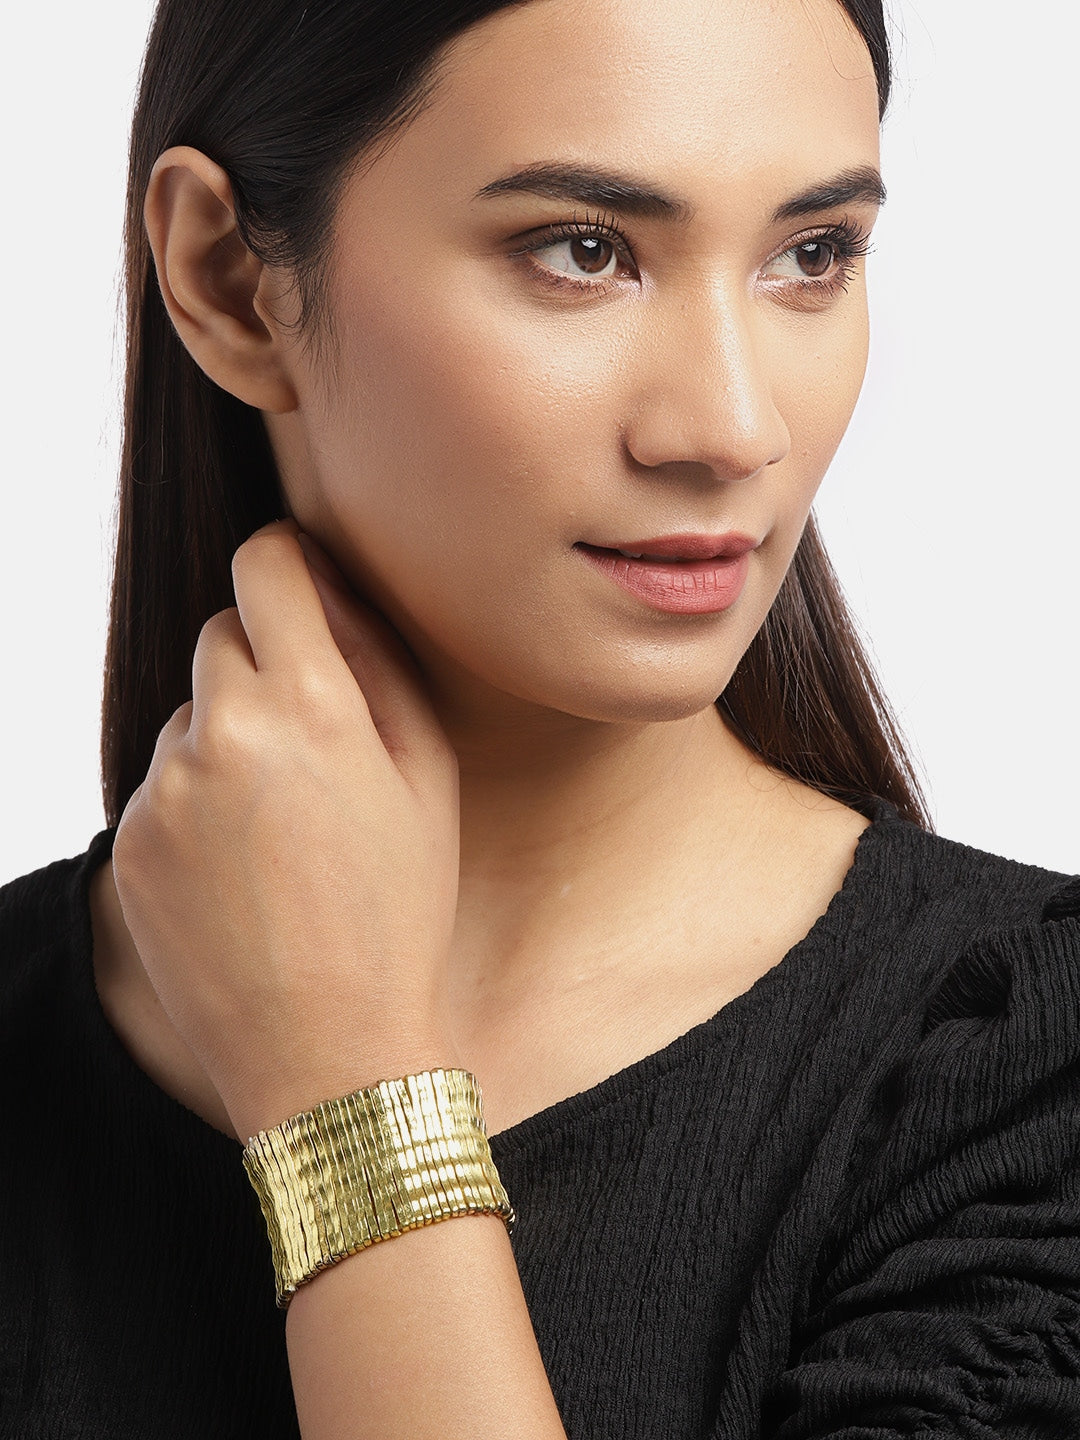 Women Gold-Toned Gold-Plated Elasticated Bracelet